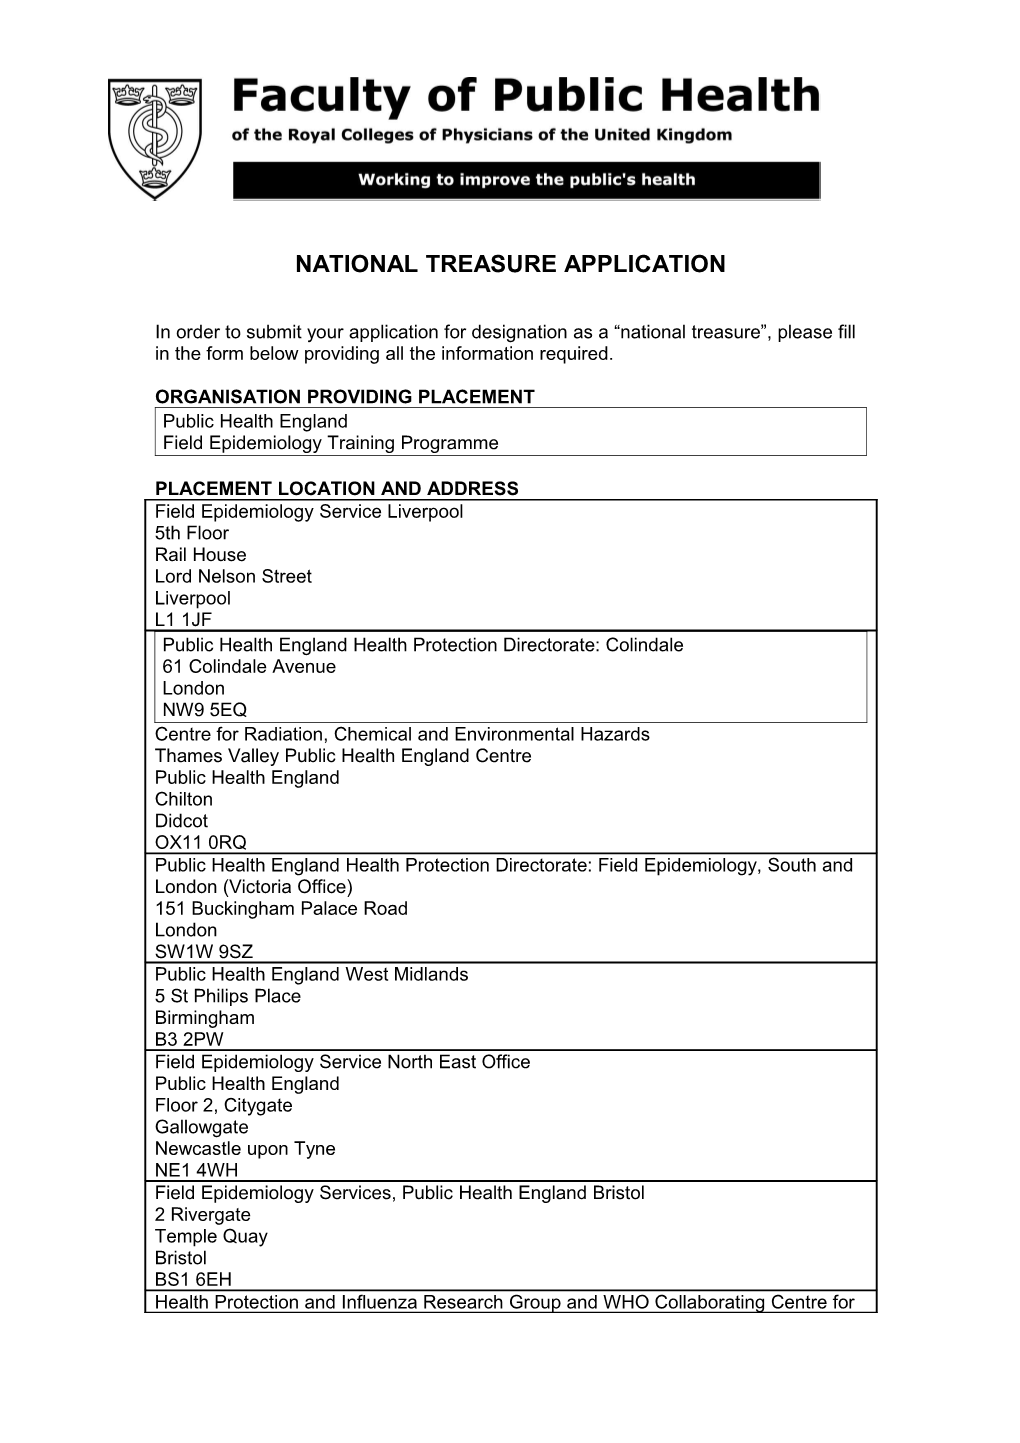 National Treasure Application